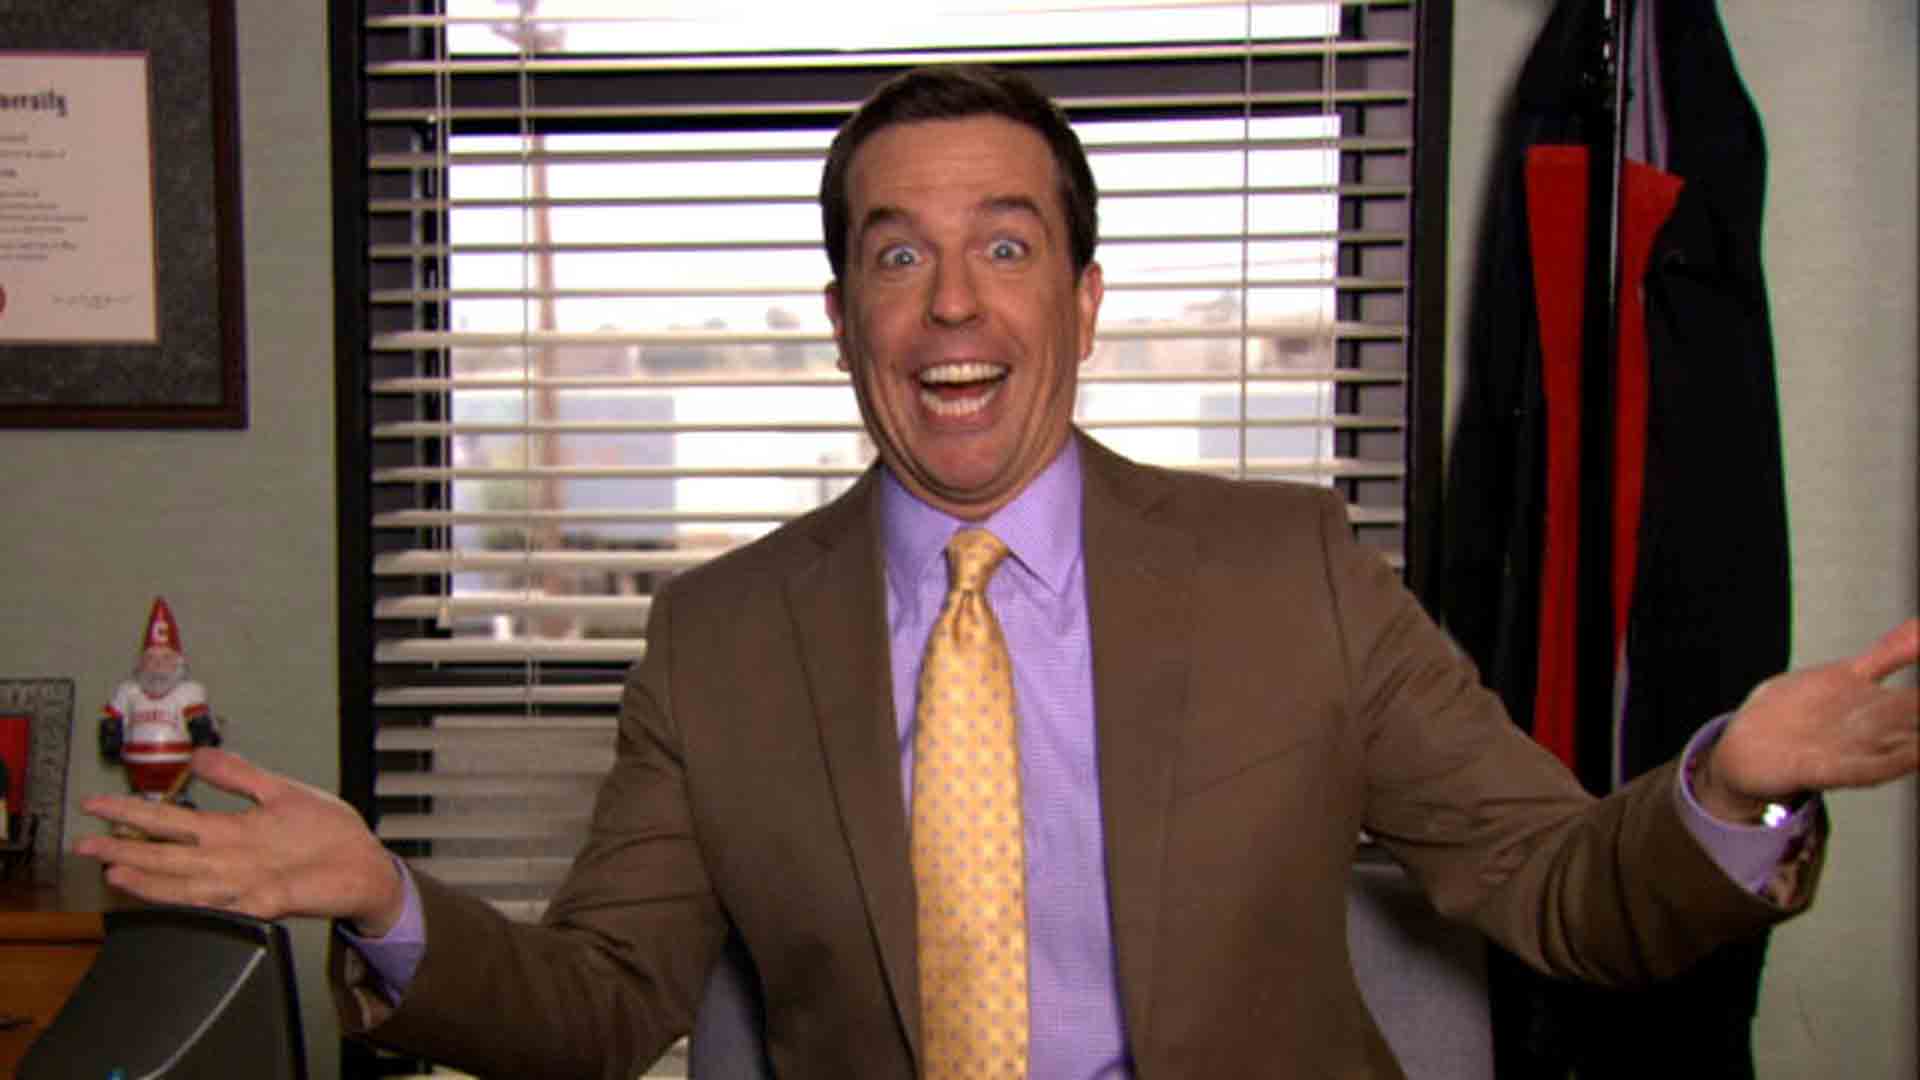 The Office Highlight: the New Boss NBC.com